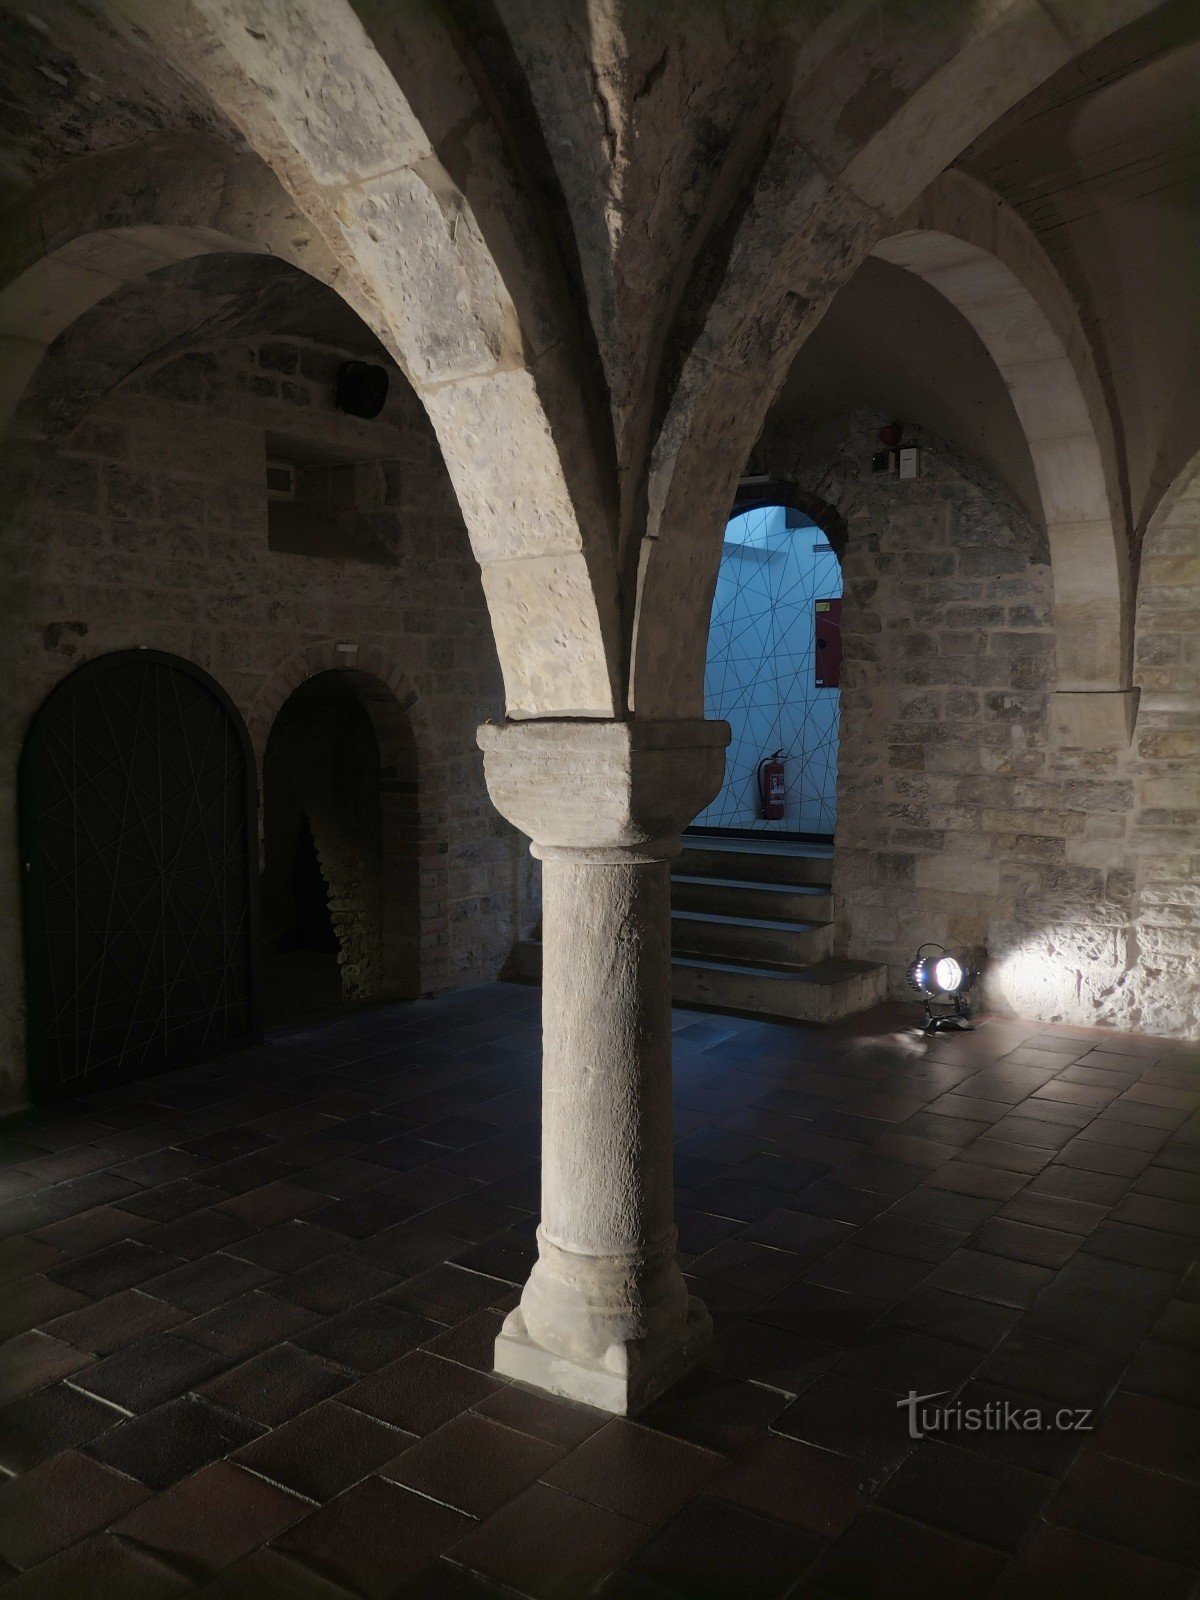 Prague (Staré Město) – the Romanesque underground of the U Černého hada house